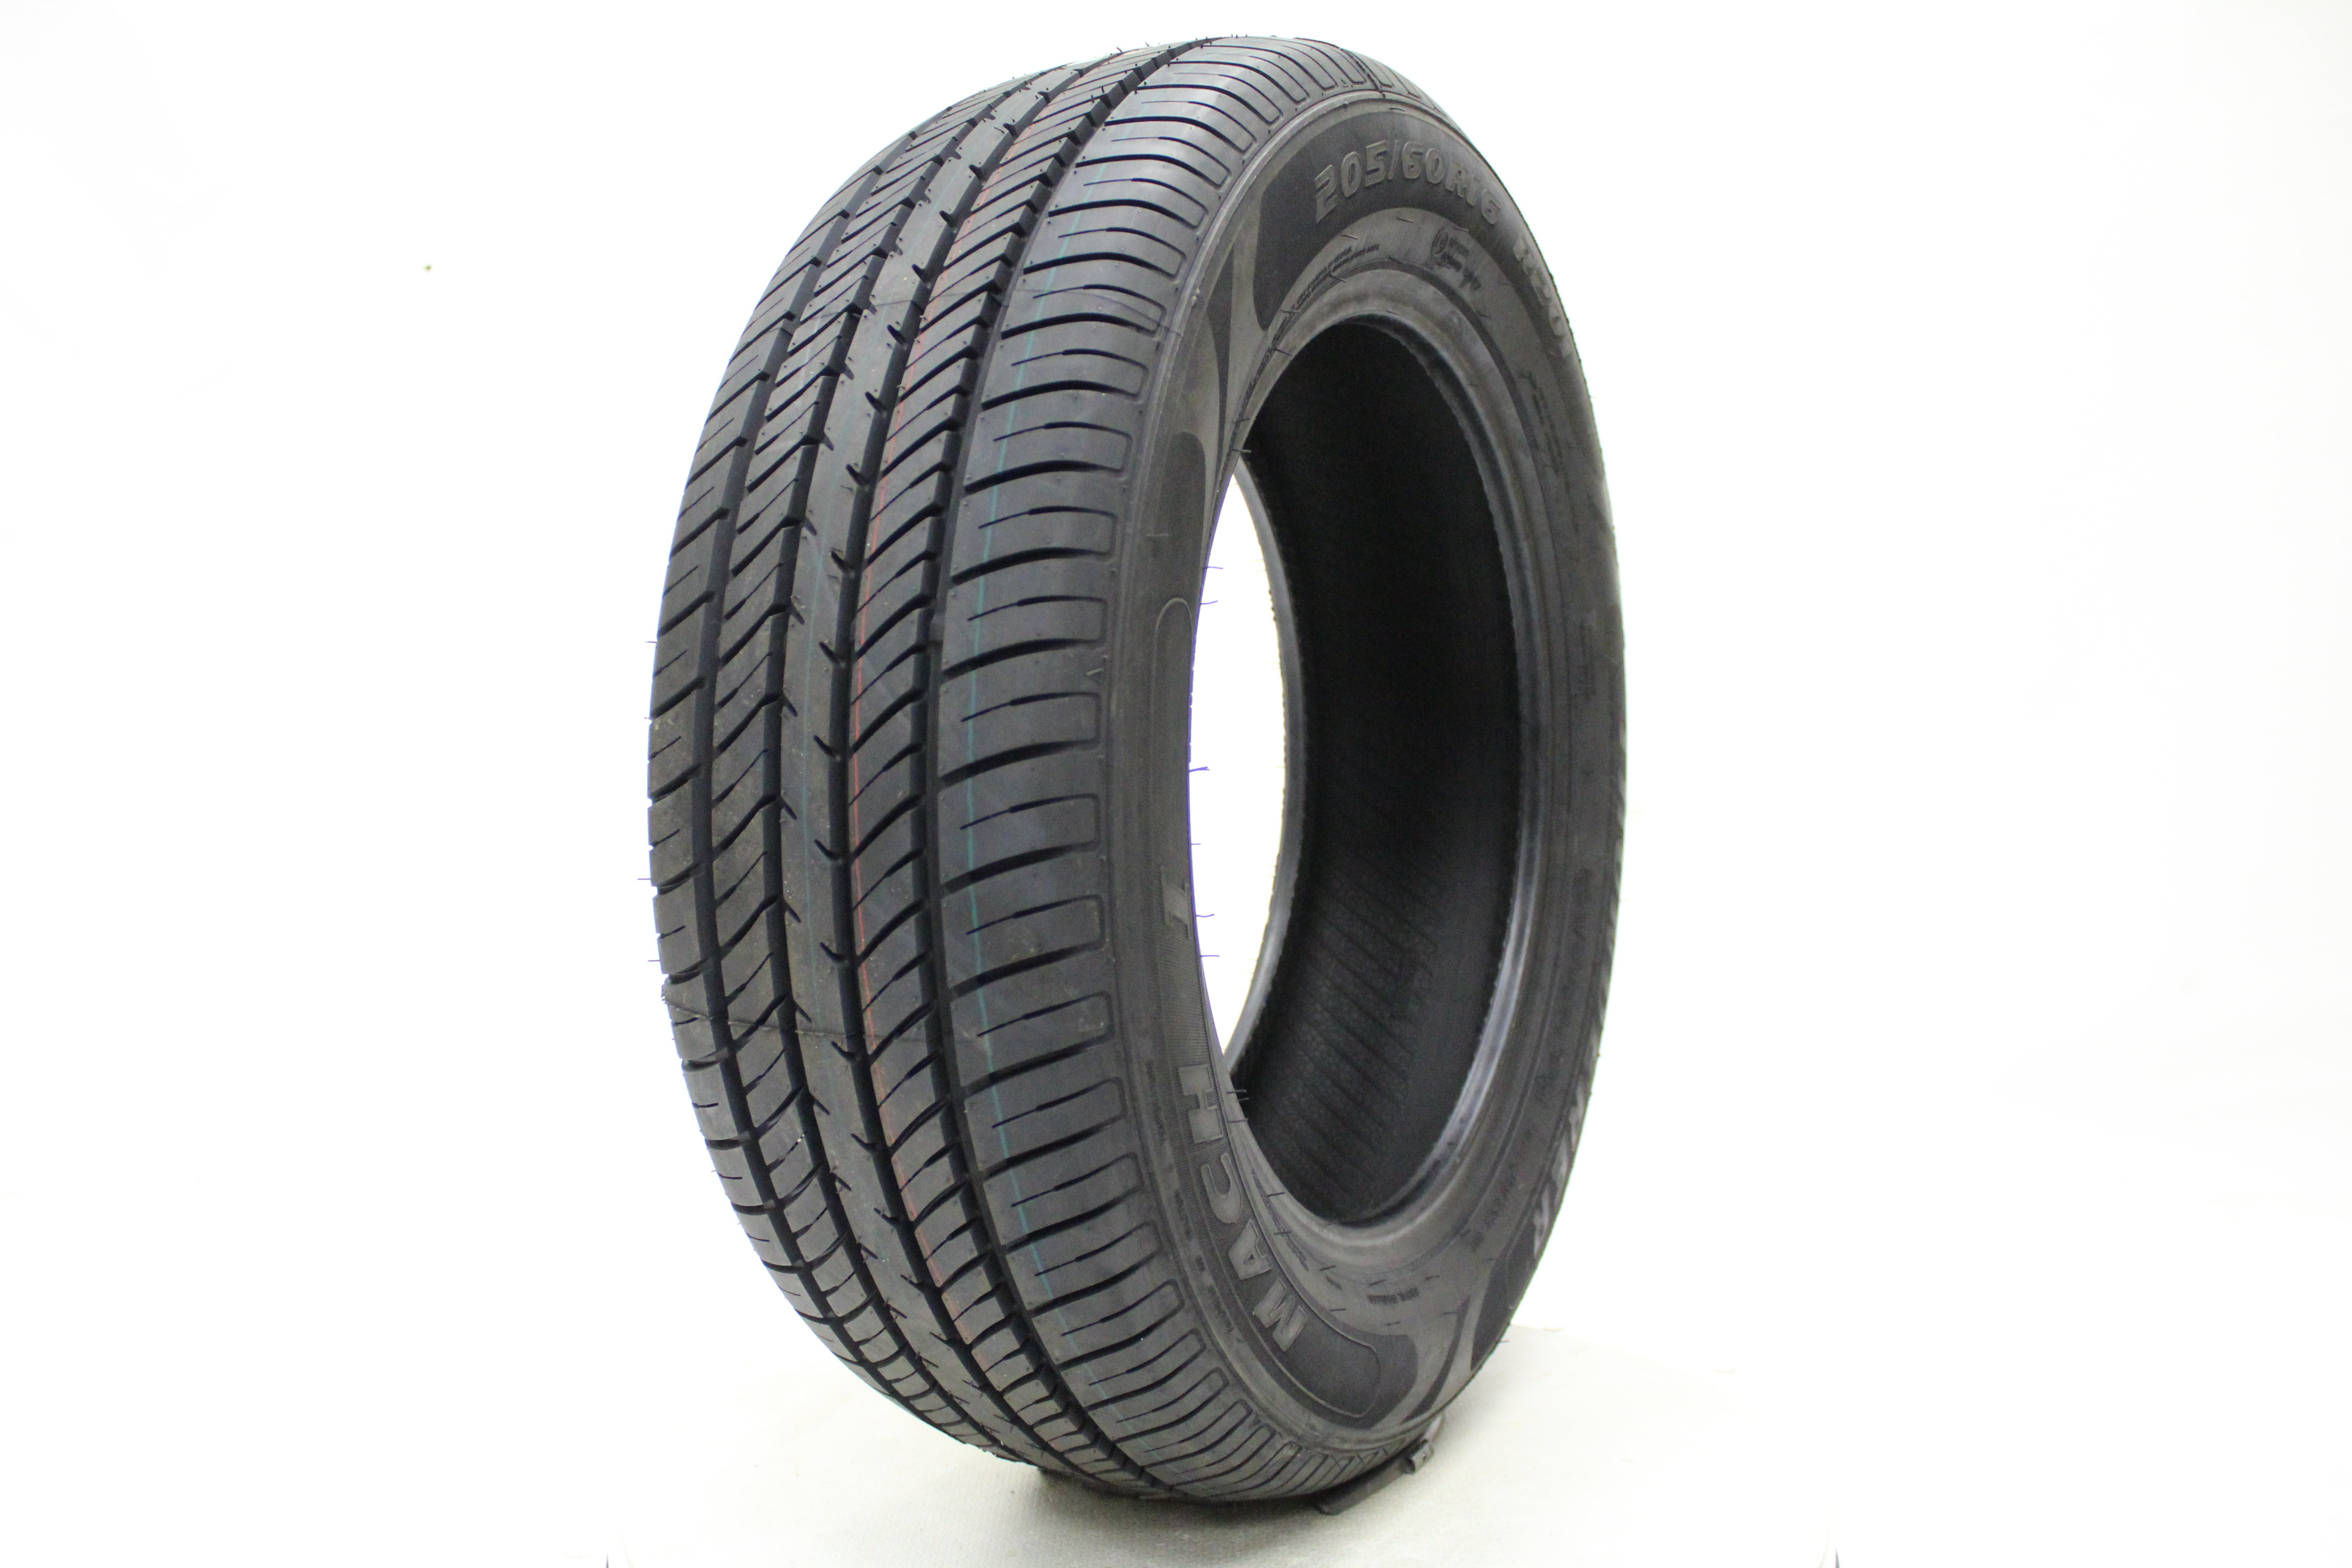 Season Radial Tire-165/80R15 87T Nexen SB802 All